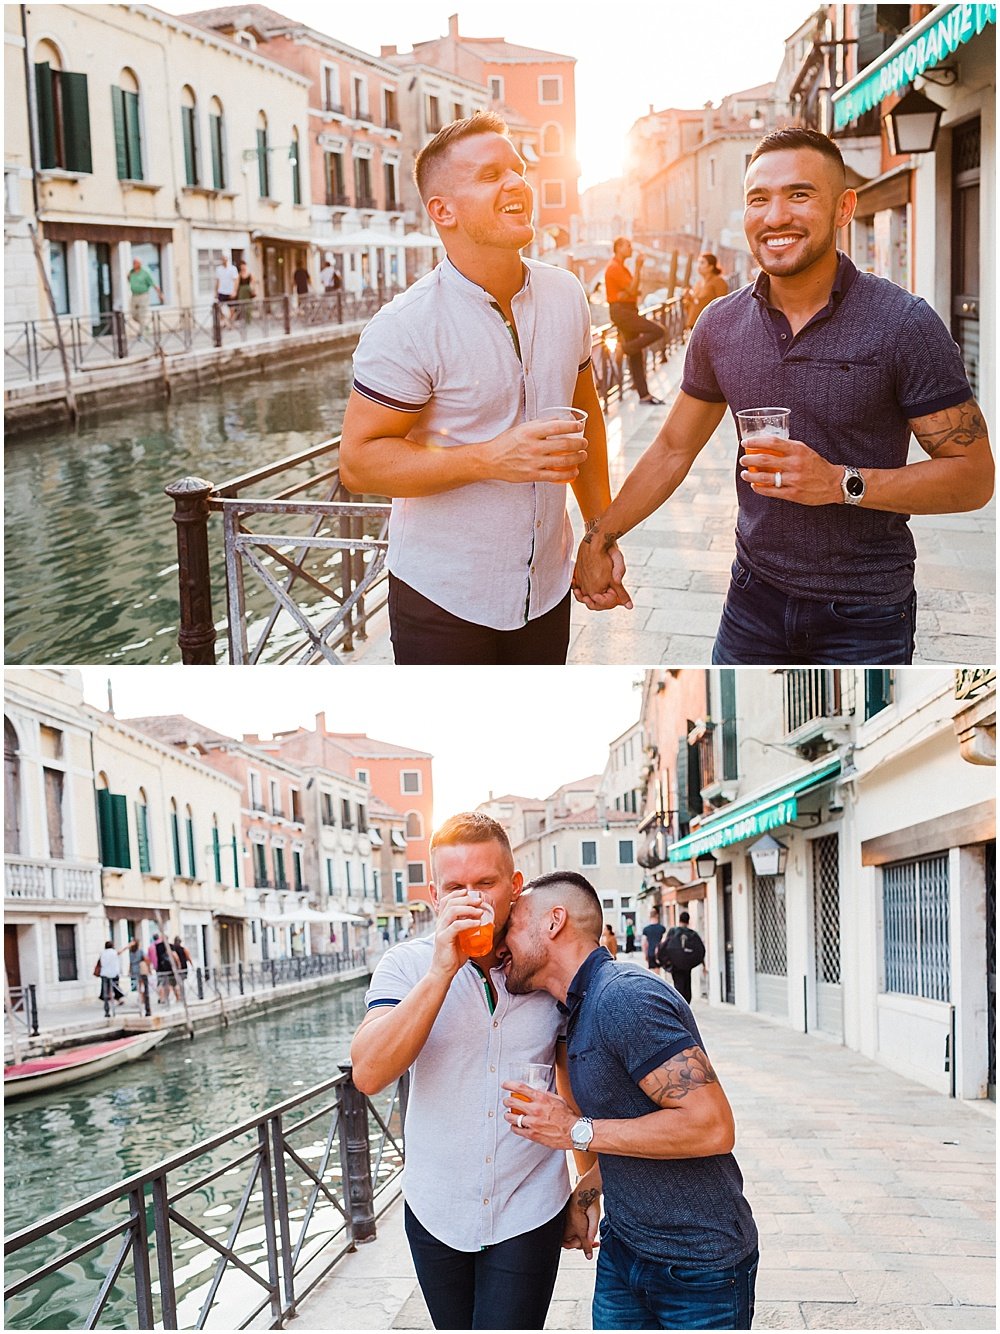 samesex-gay-lgbt-photographer-venice-italy.jpeg